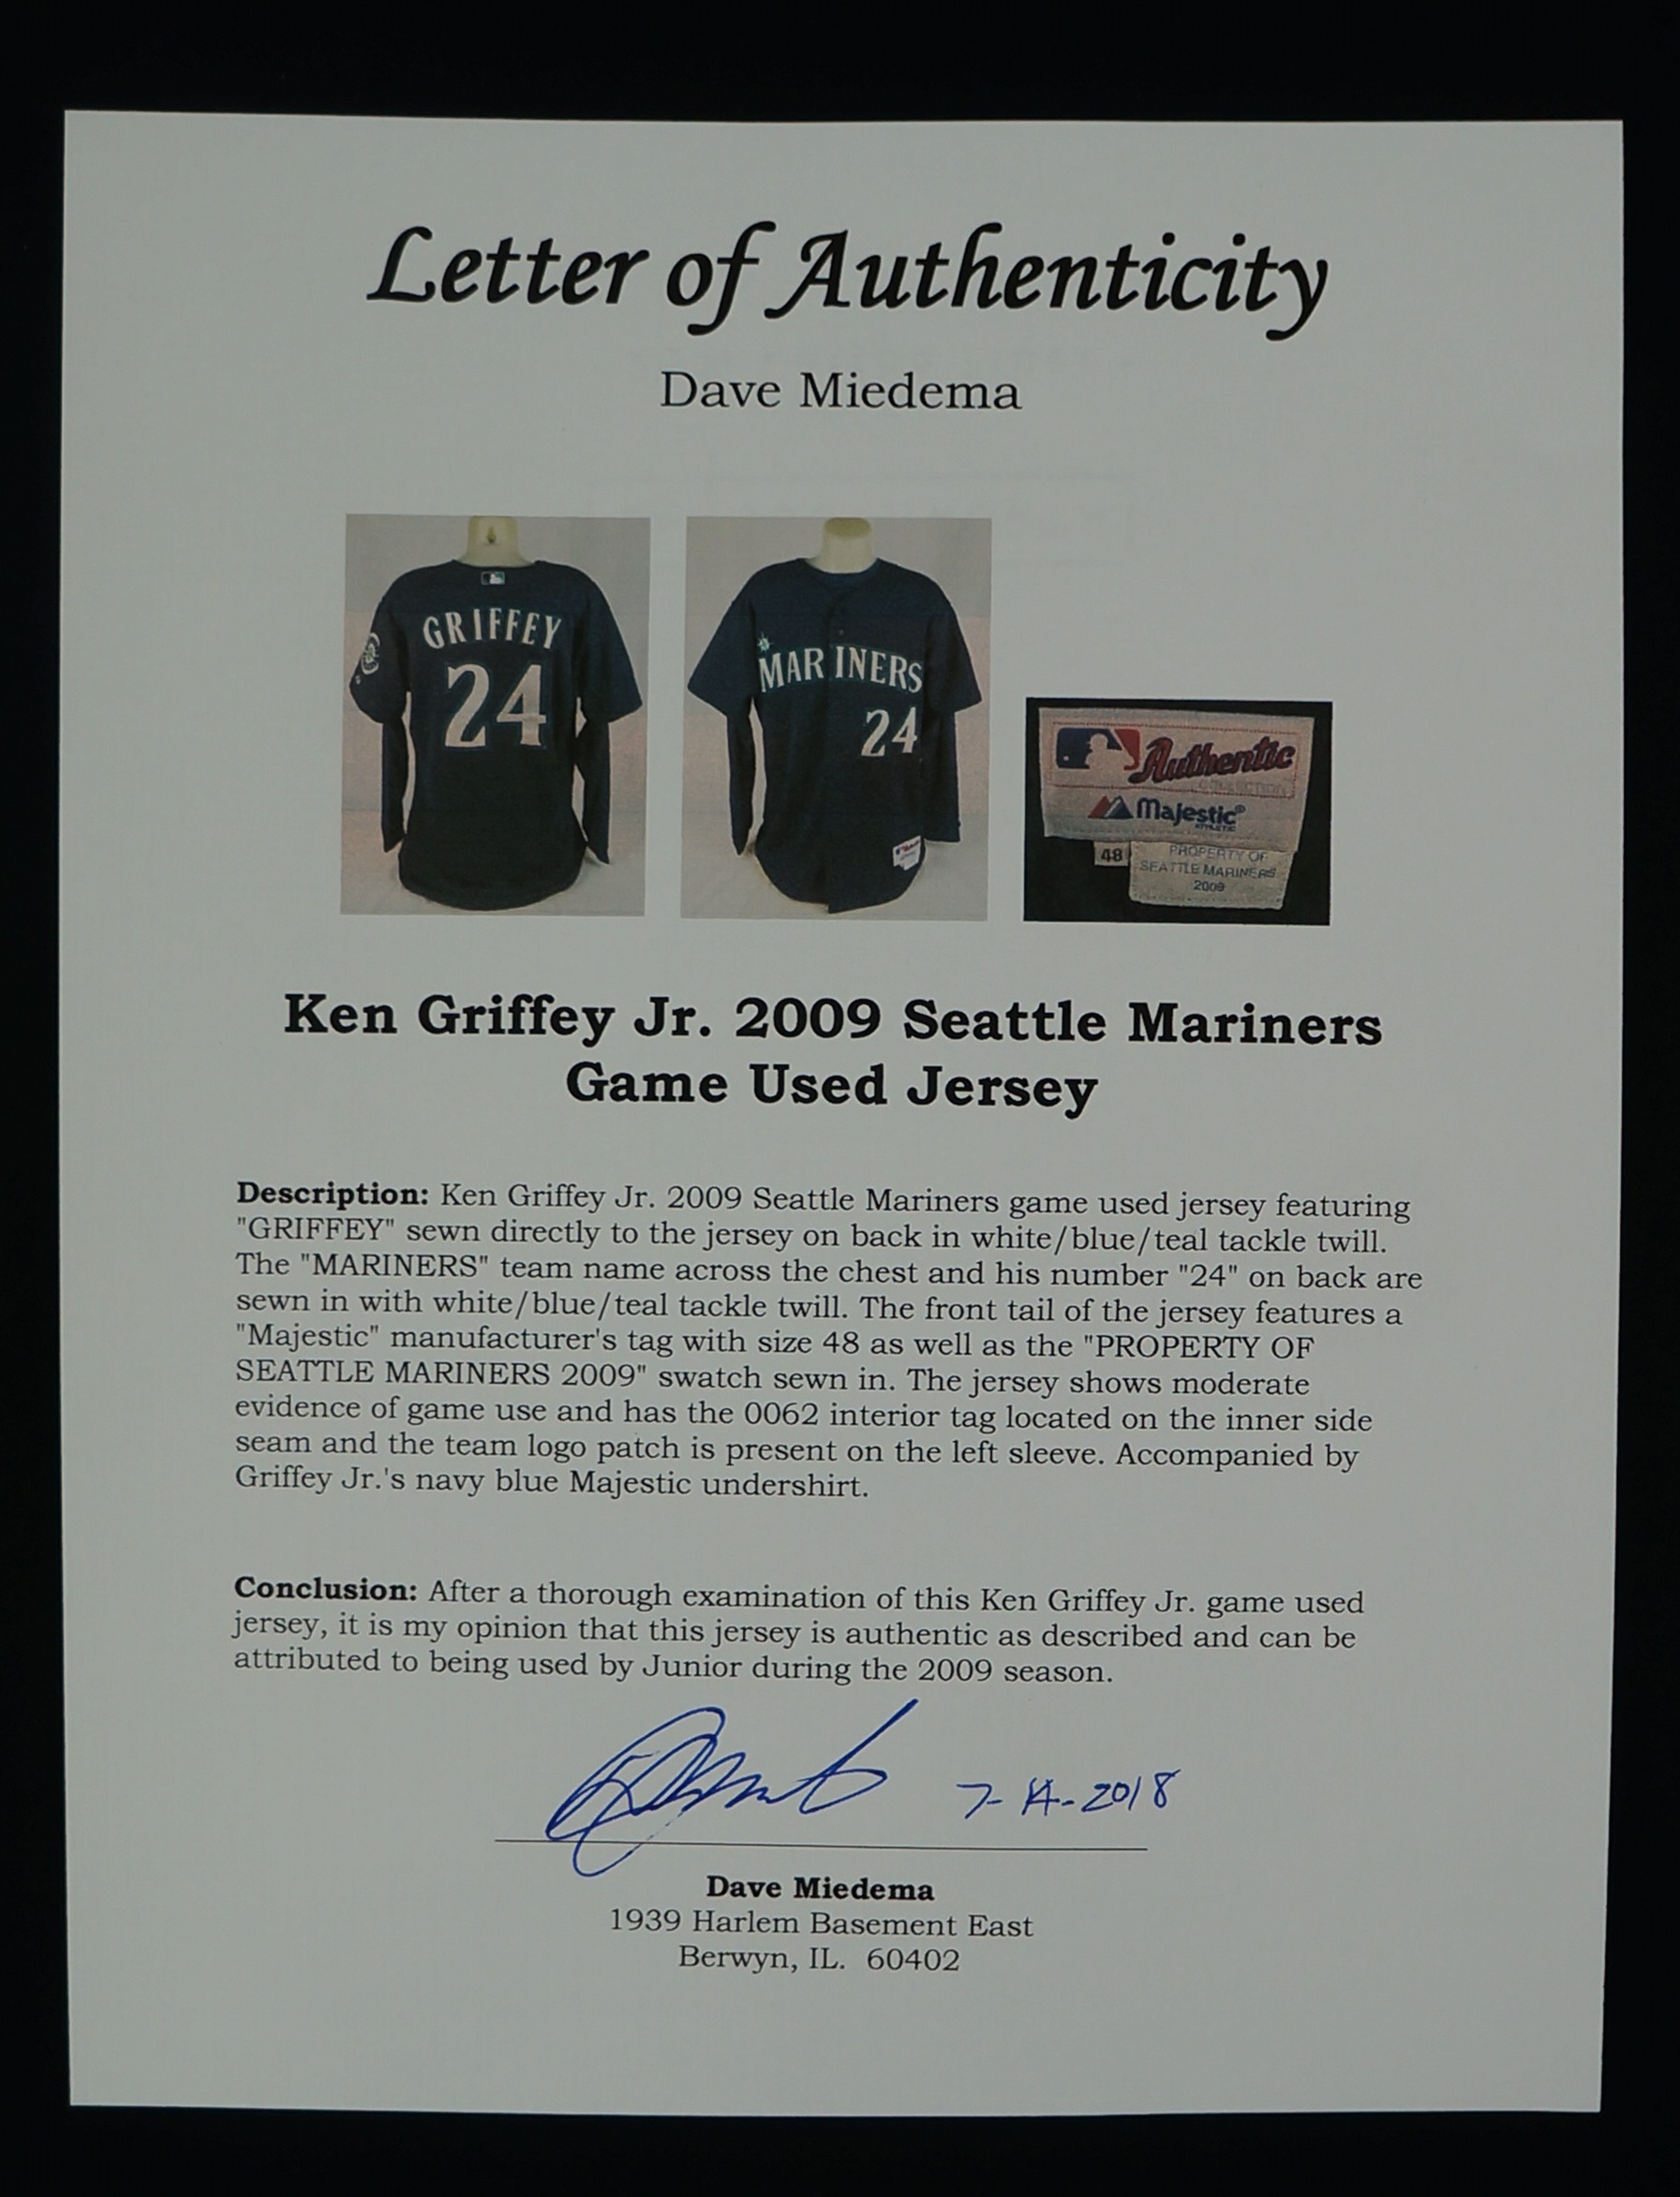 1999 Ken Griffey, Jr. Game Worn Seattle Mariners Jersey., Lot #82177